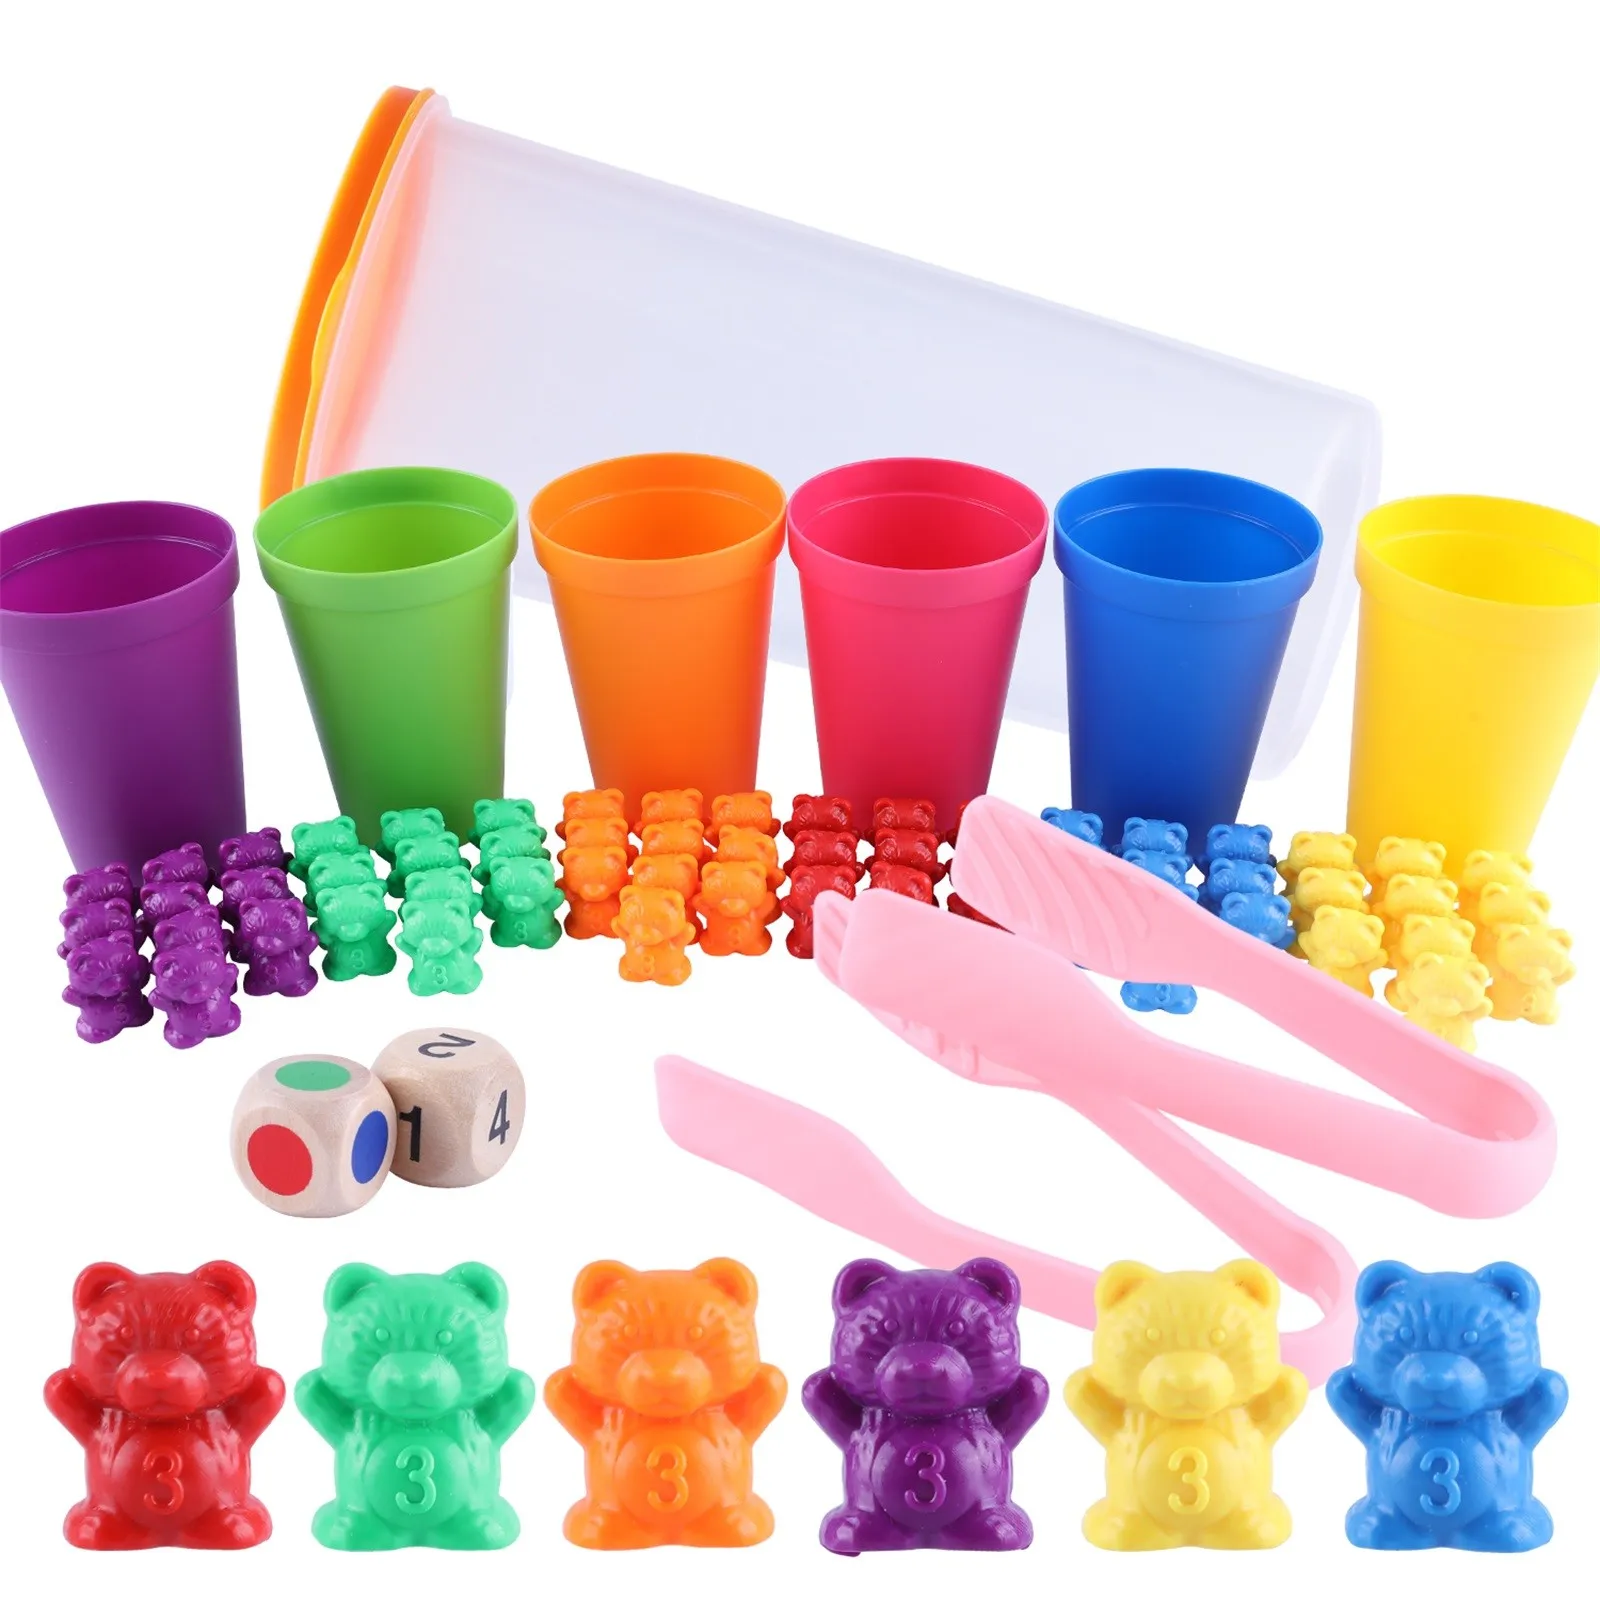 Sorting Bears 60 Rainbow Colored Bears 6 Stacking Cups Kids Tweezers Storage for sale online 